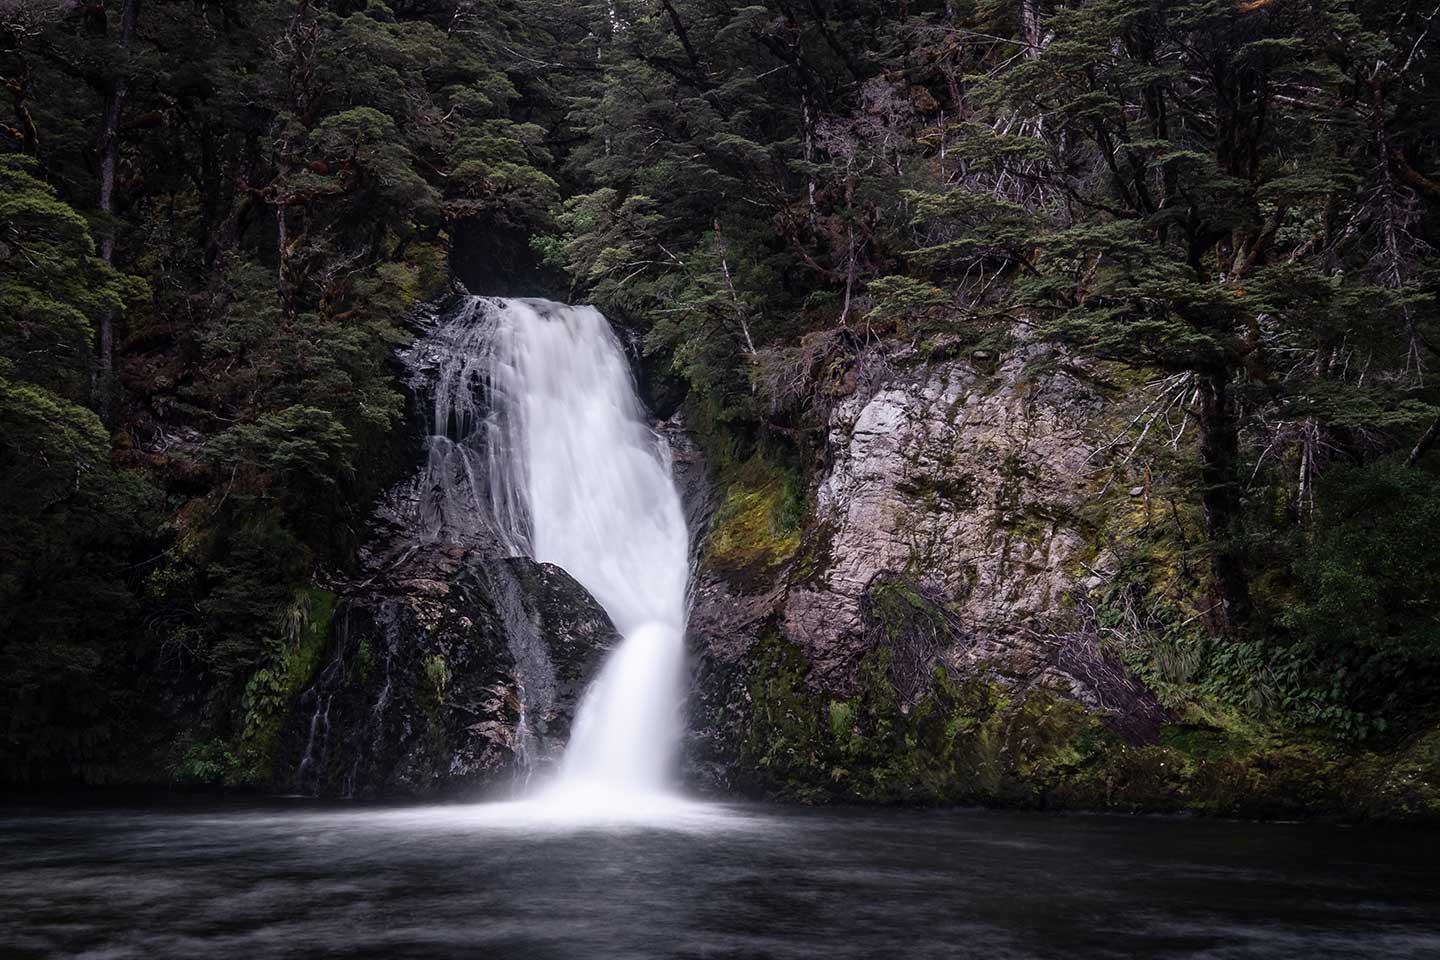 White rapid waters flow down the Iris Burn waterfall to the still water below